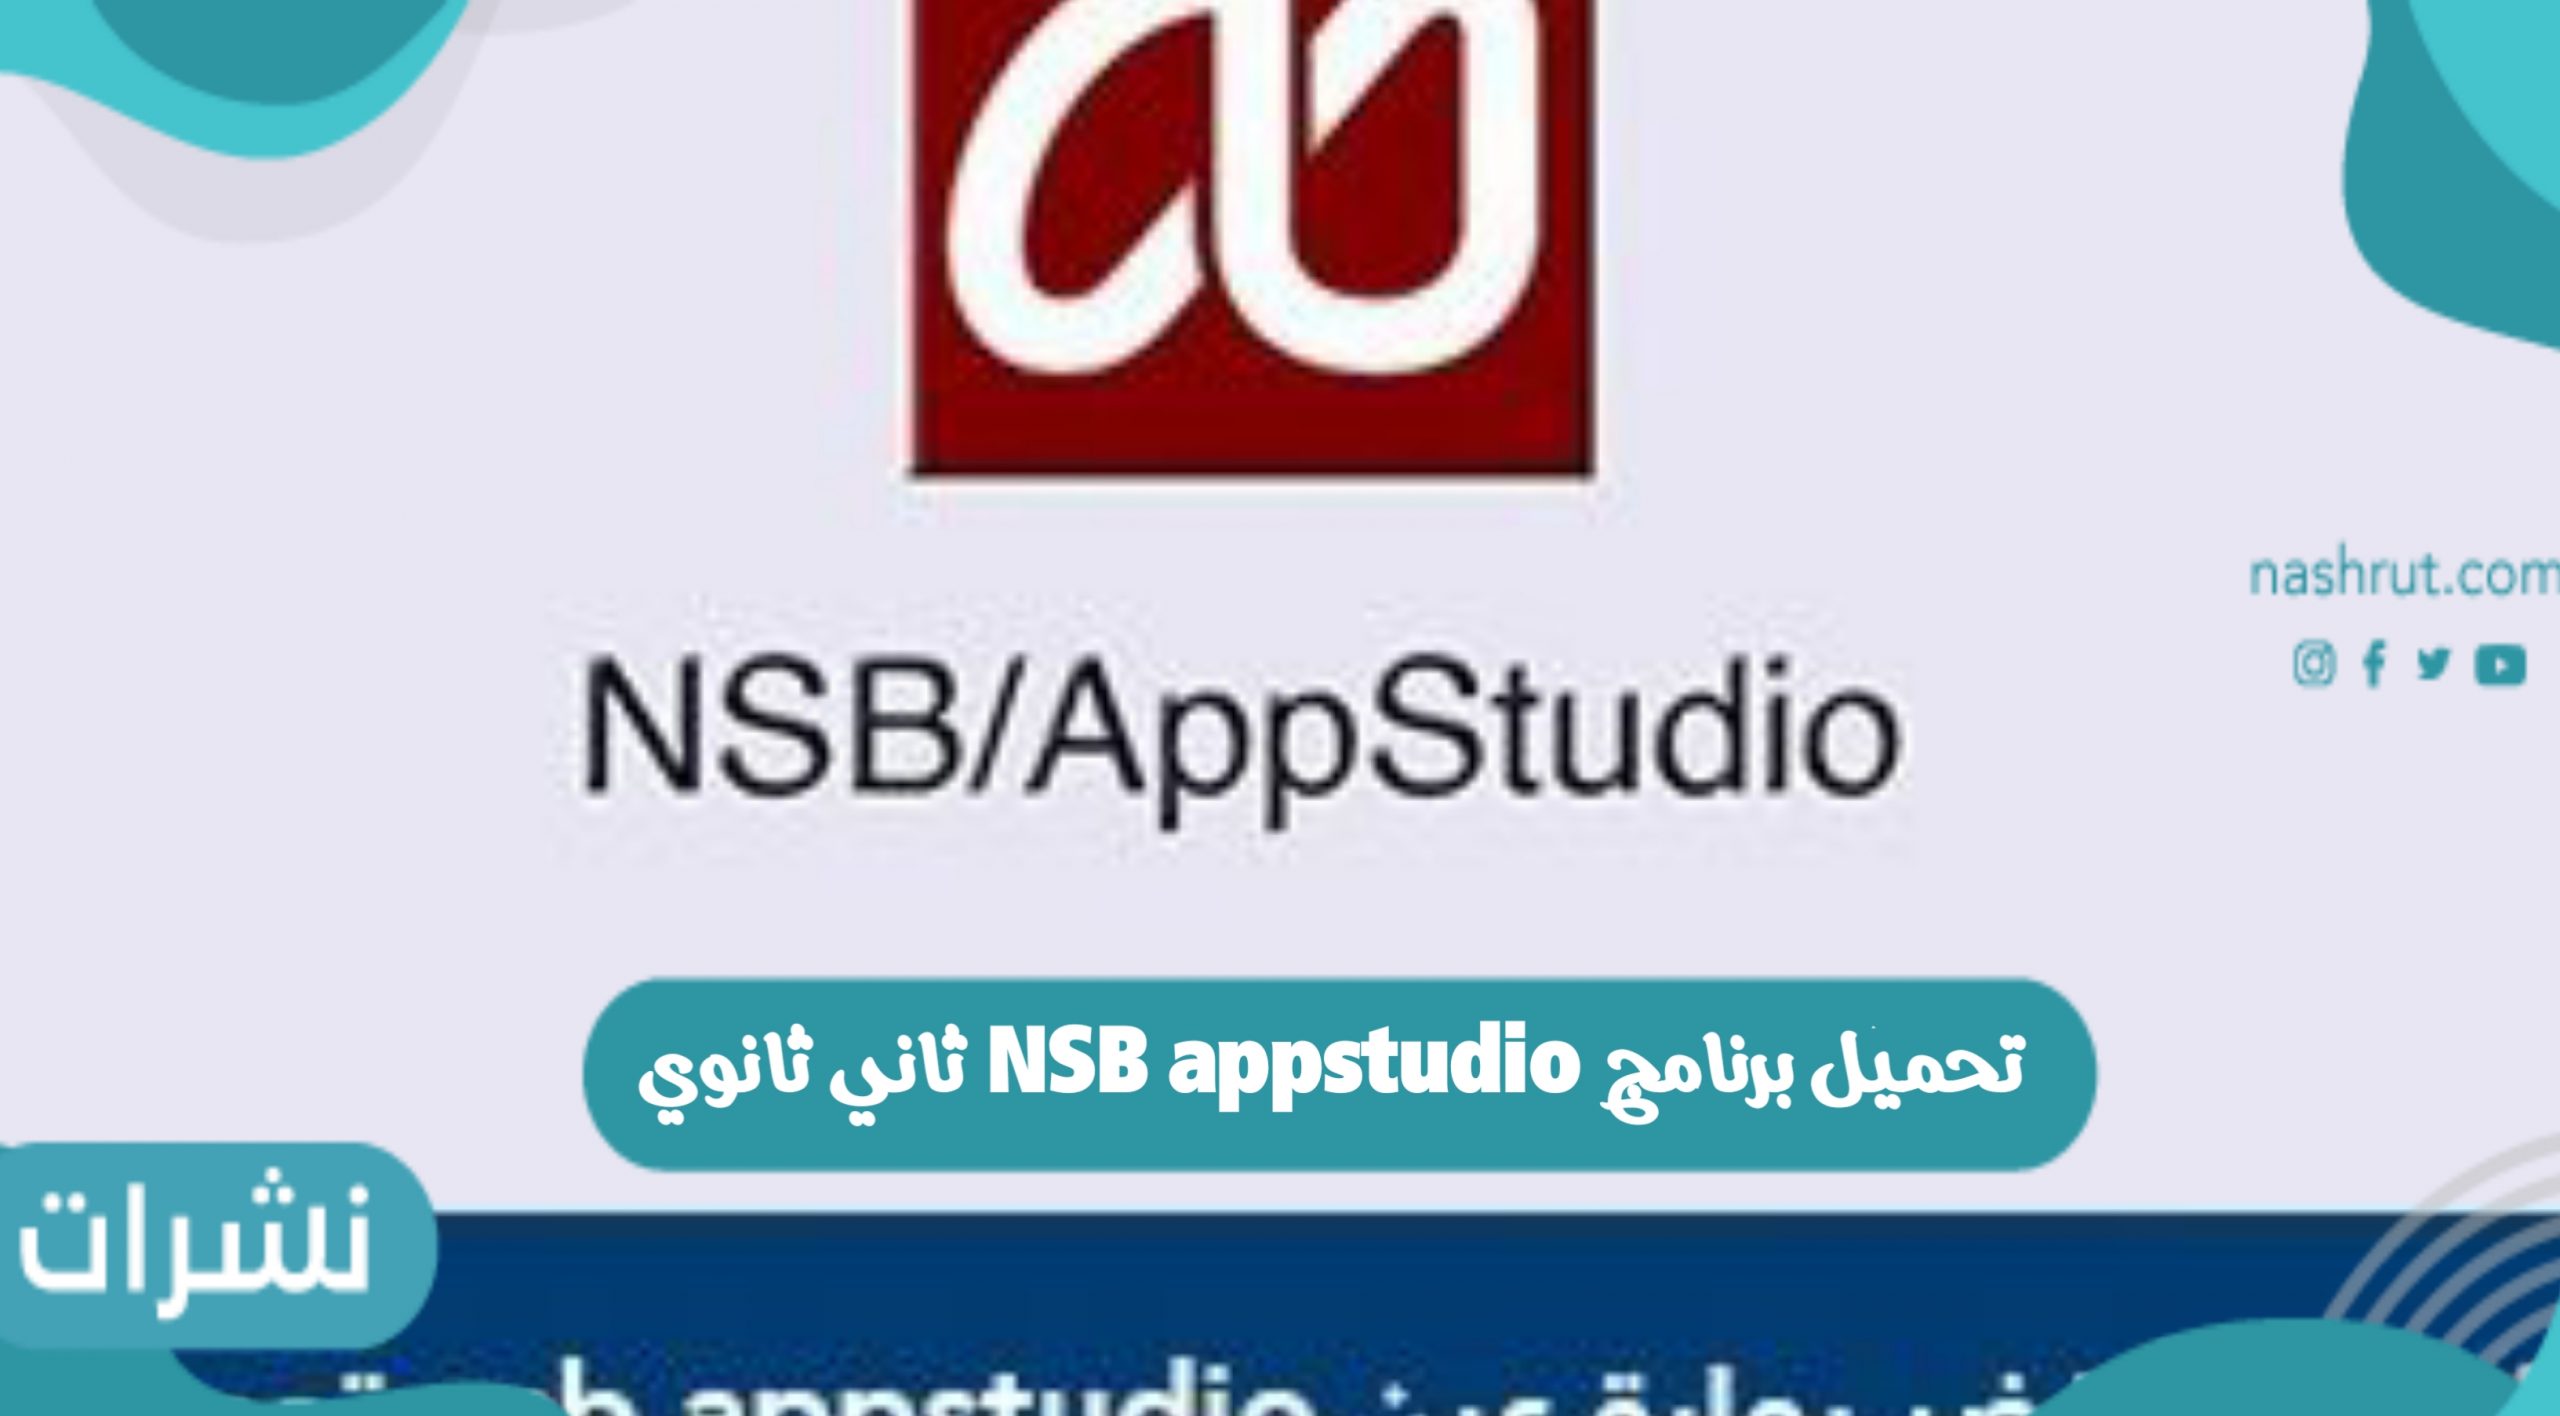 nsb appstudio